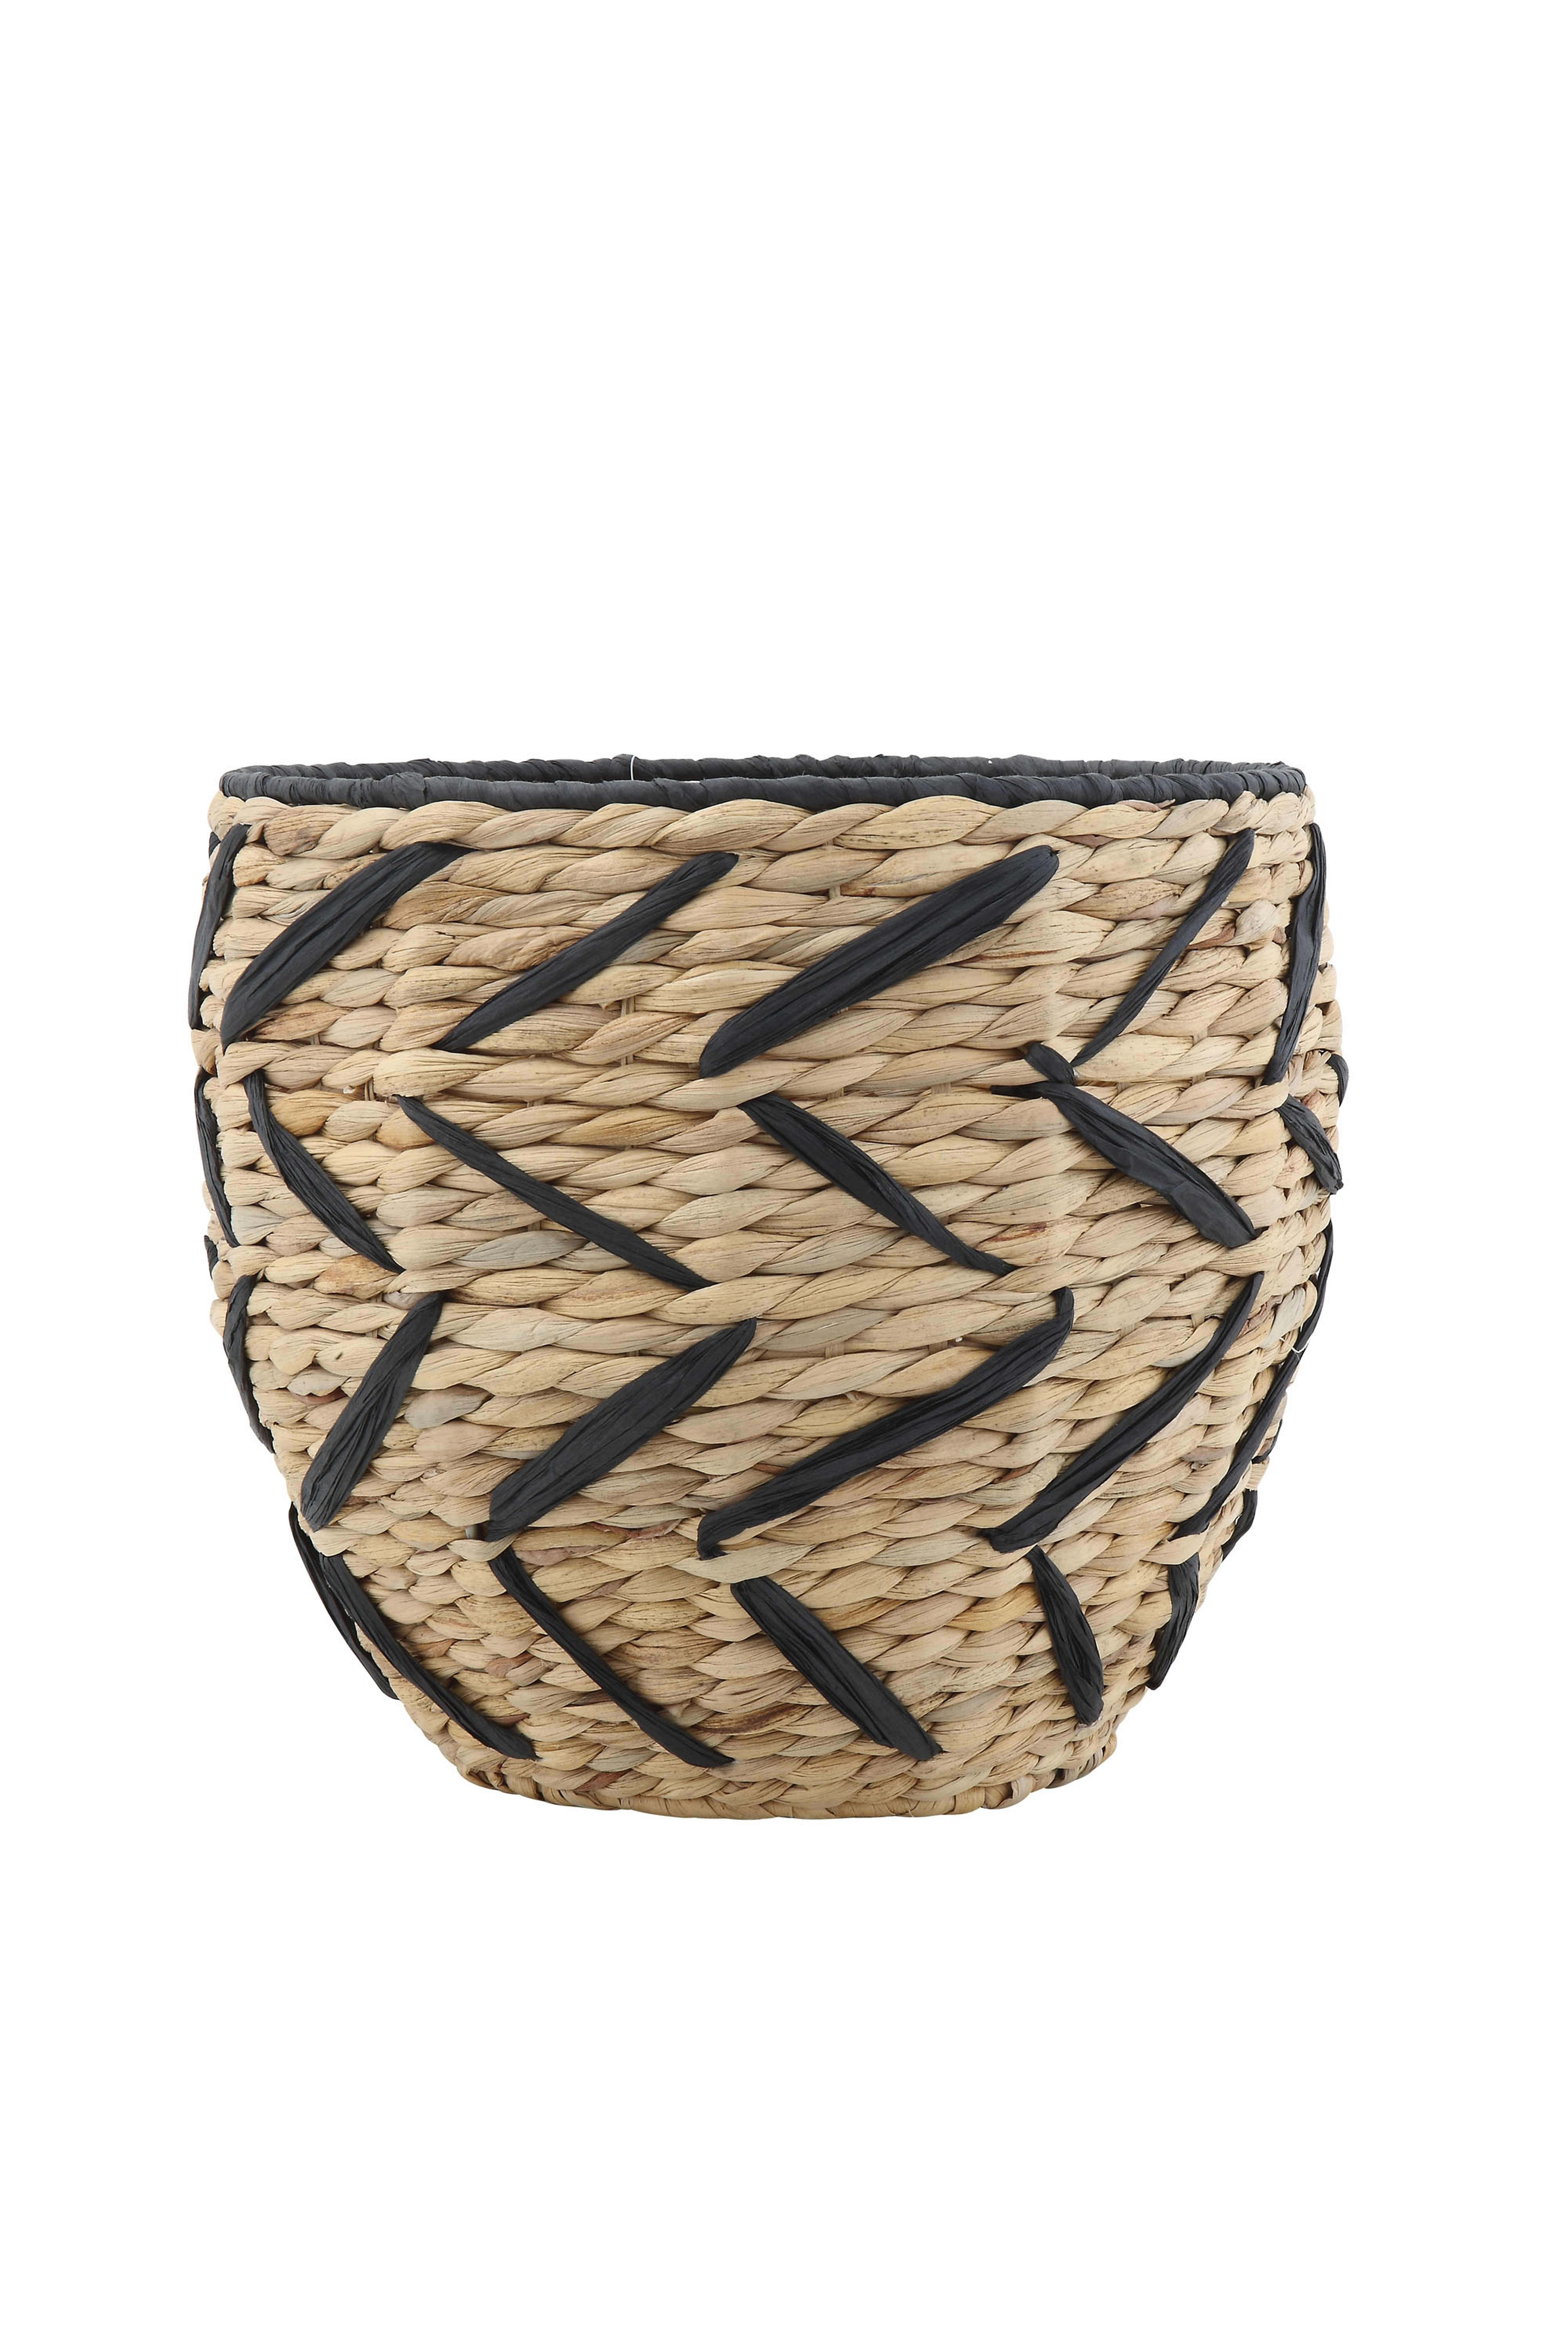 Woven Seagrass Basket with Black Design & Rim - Moss & Wilder